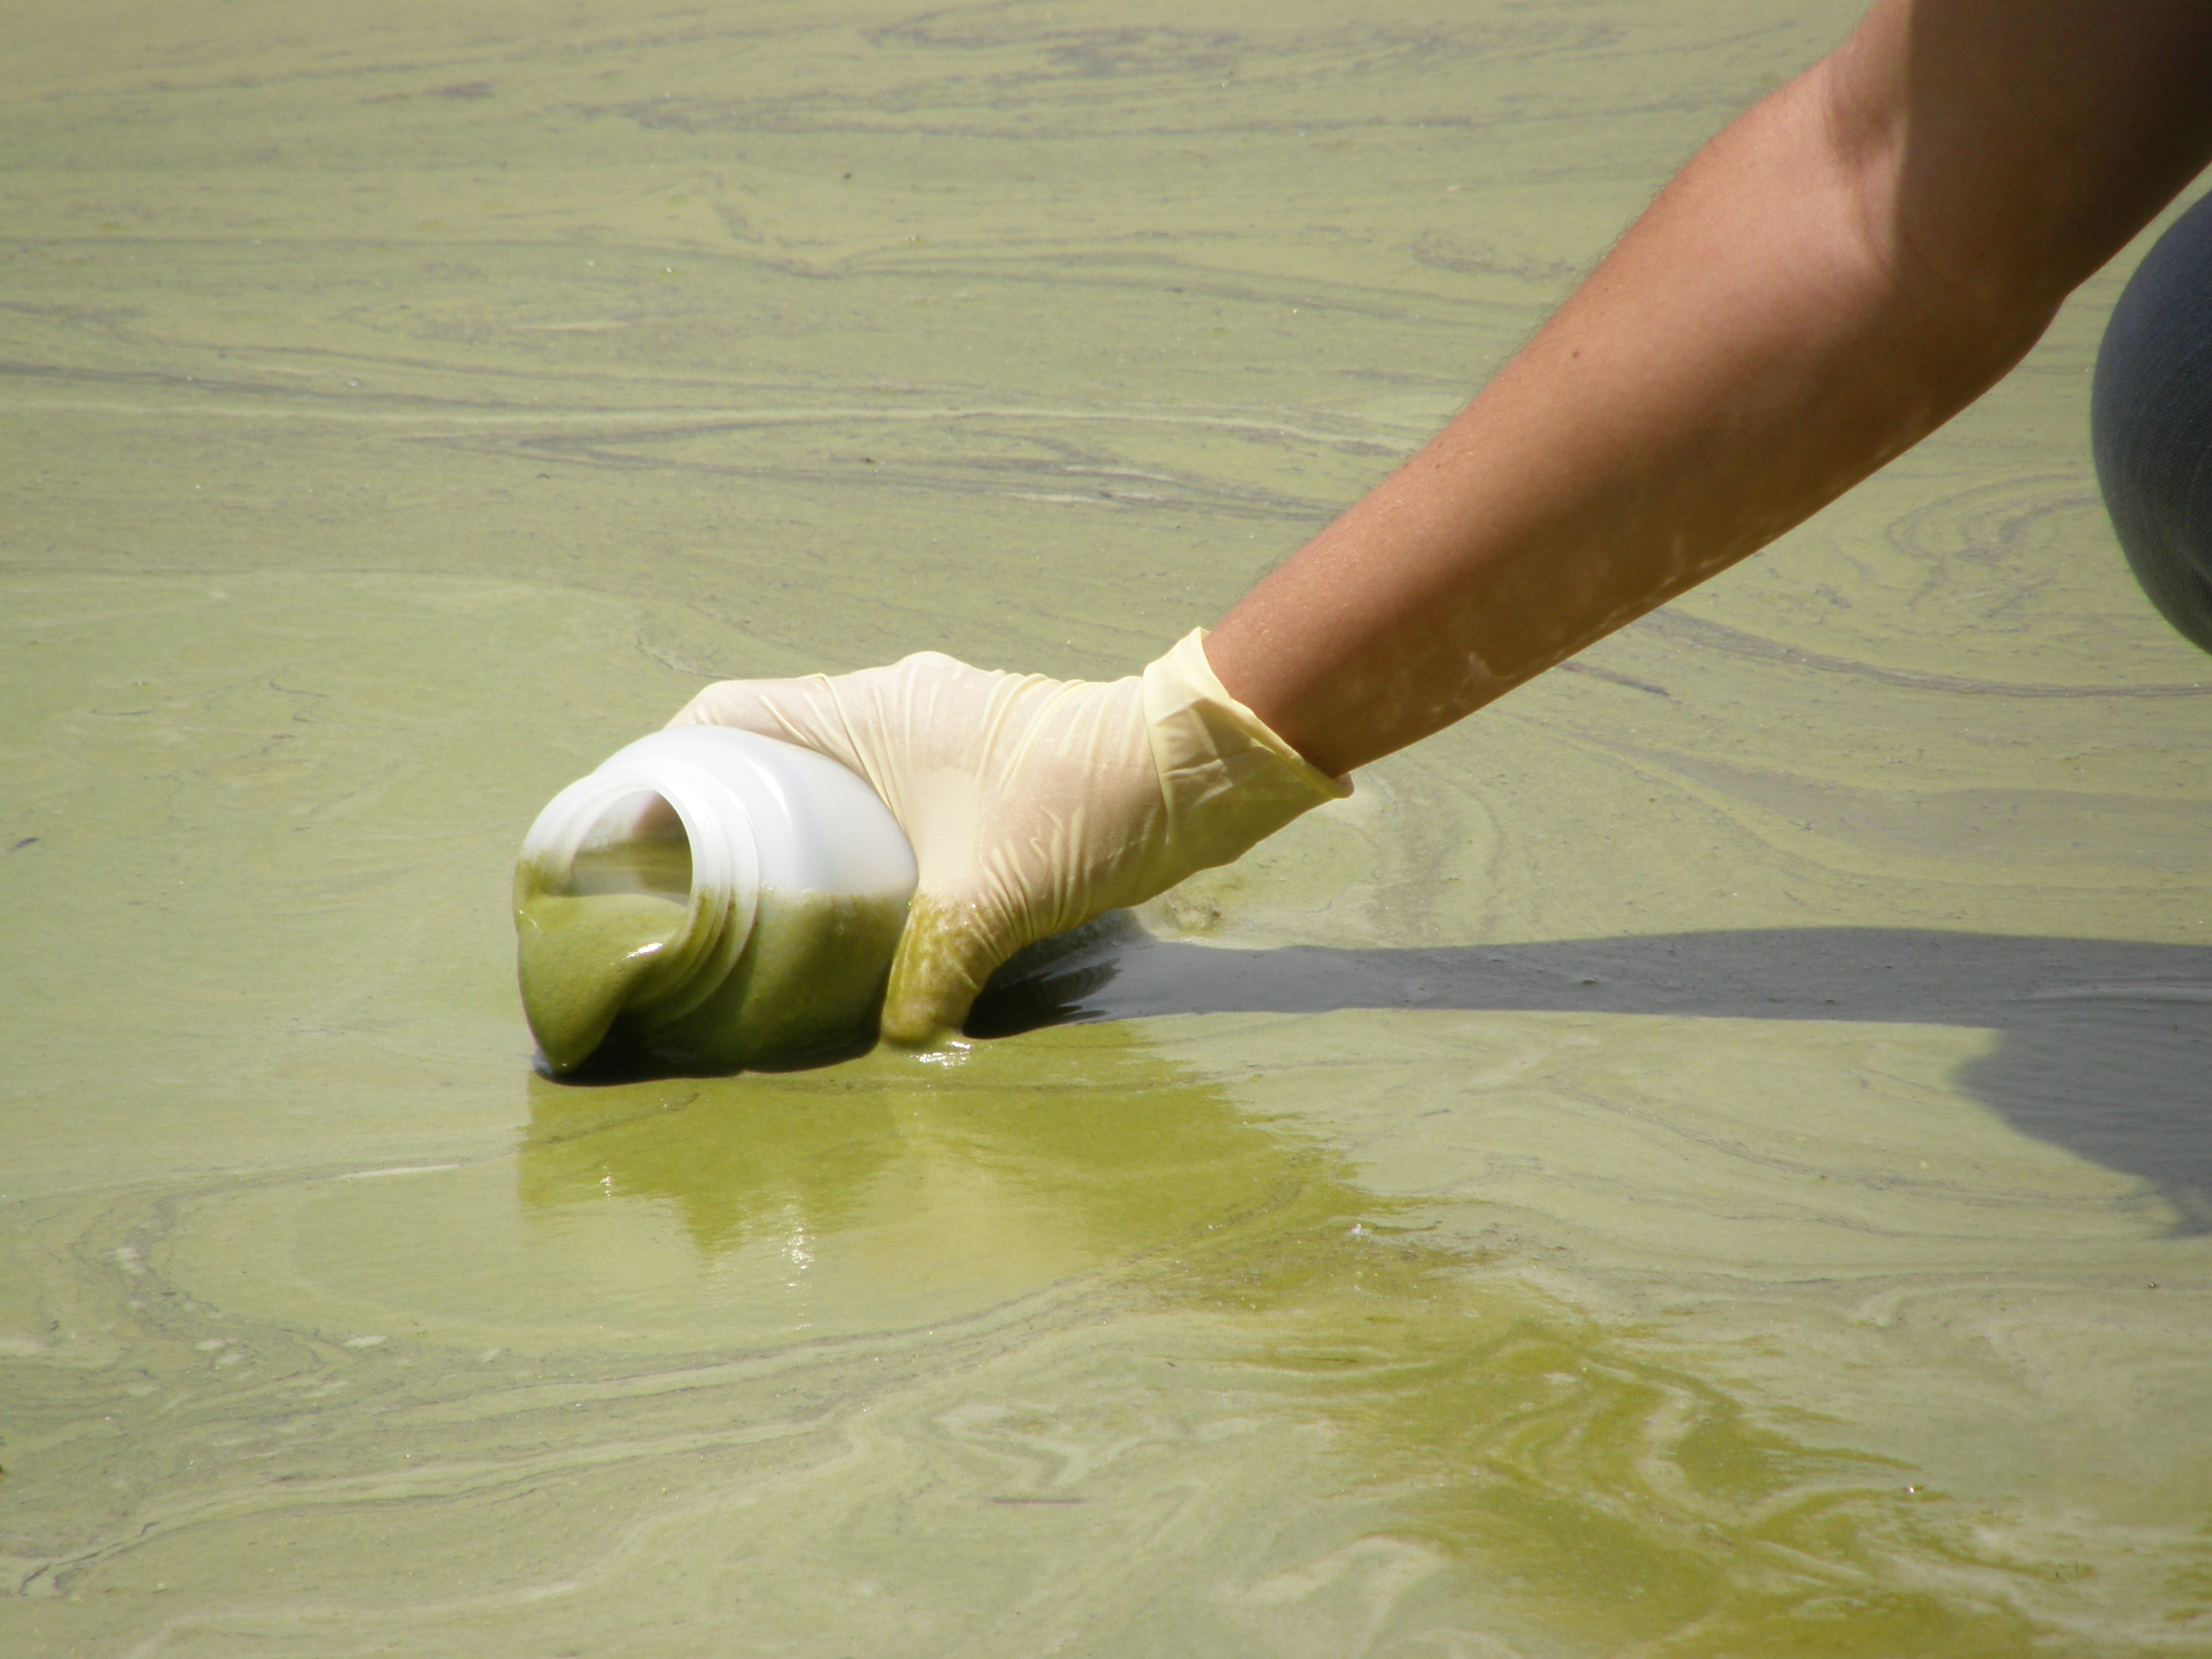 Nanomaterials Could Mean More Algae Outbreaks for Wetlands, Waterways